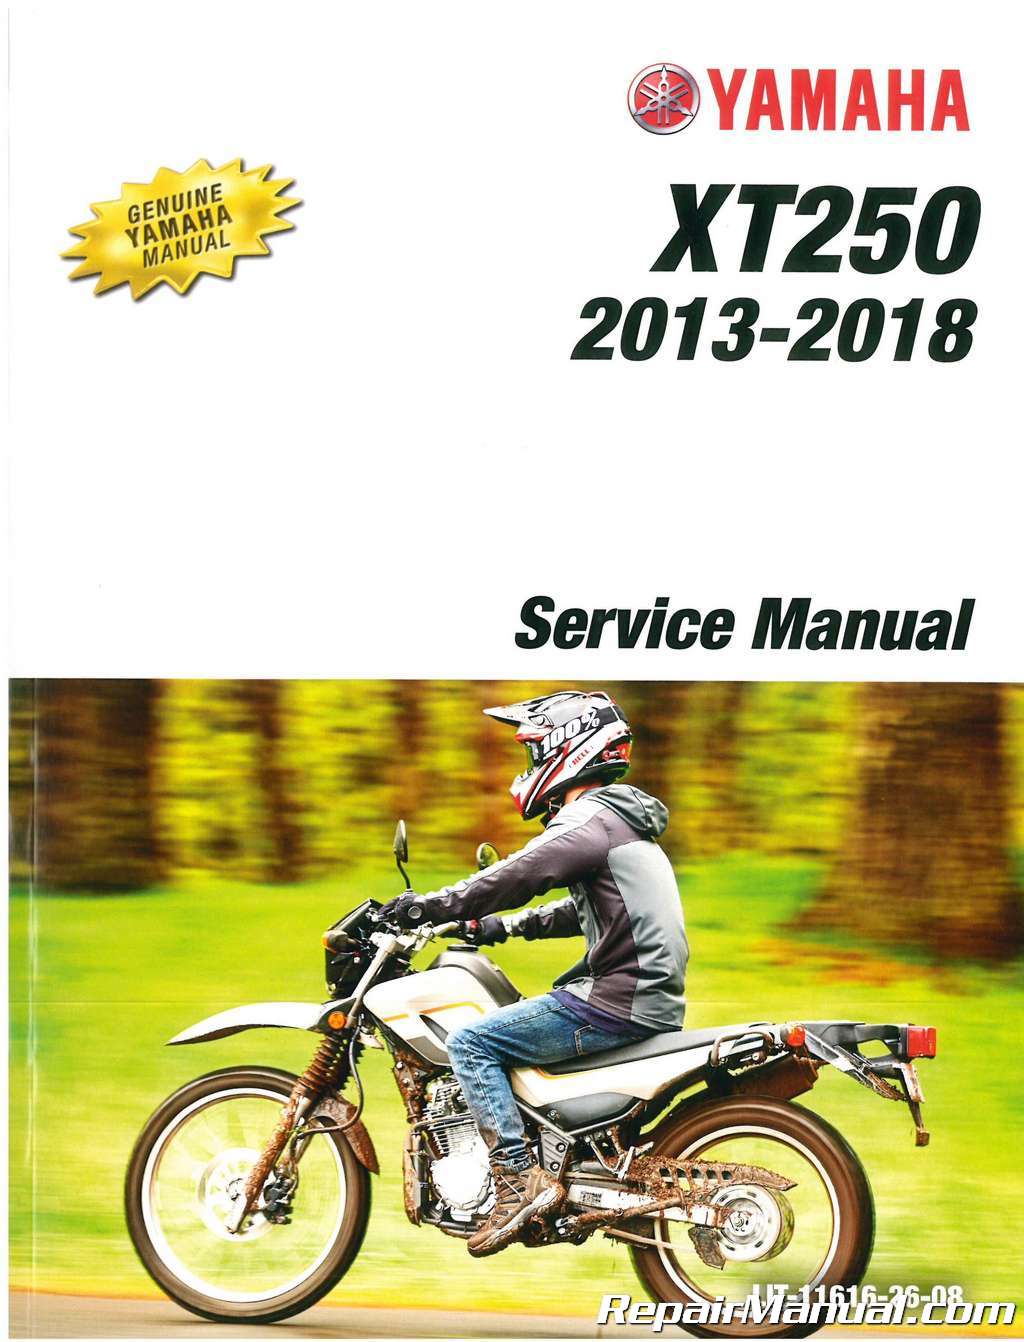 2013 – 2018 Yamaha XT250 Motorcycle Service Manual